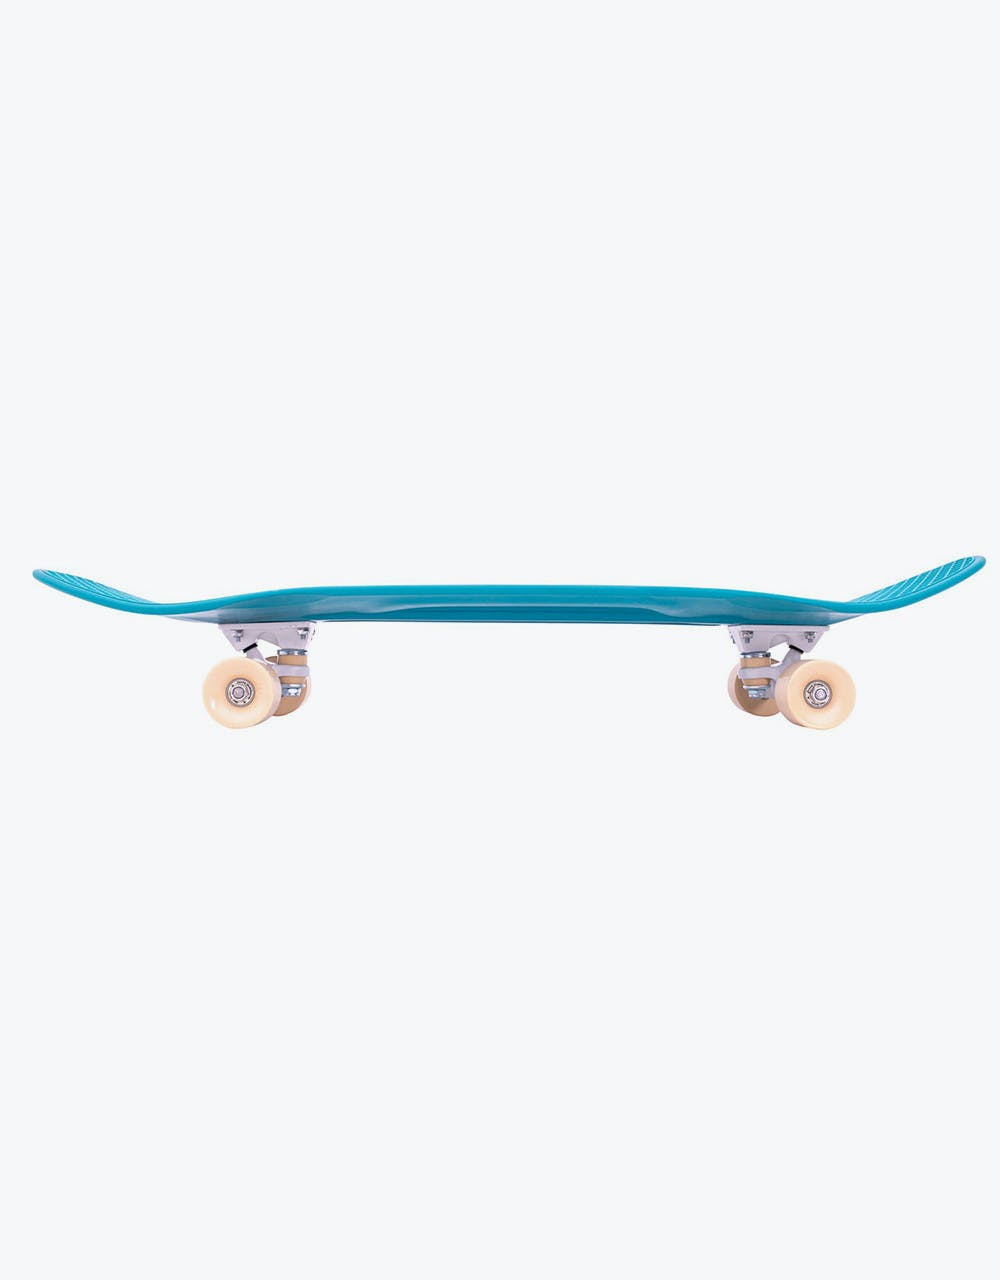 Penny Skateboards Classic Cruiser - 32" - Ocean Mist